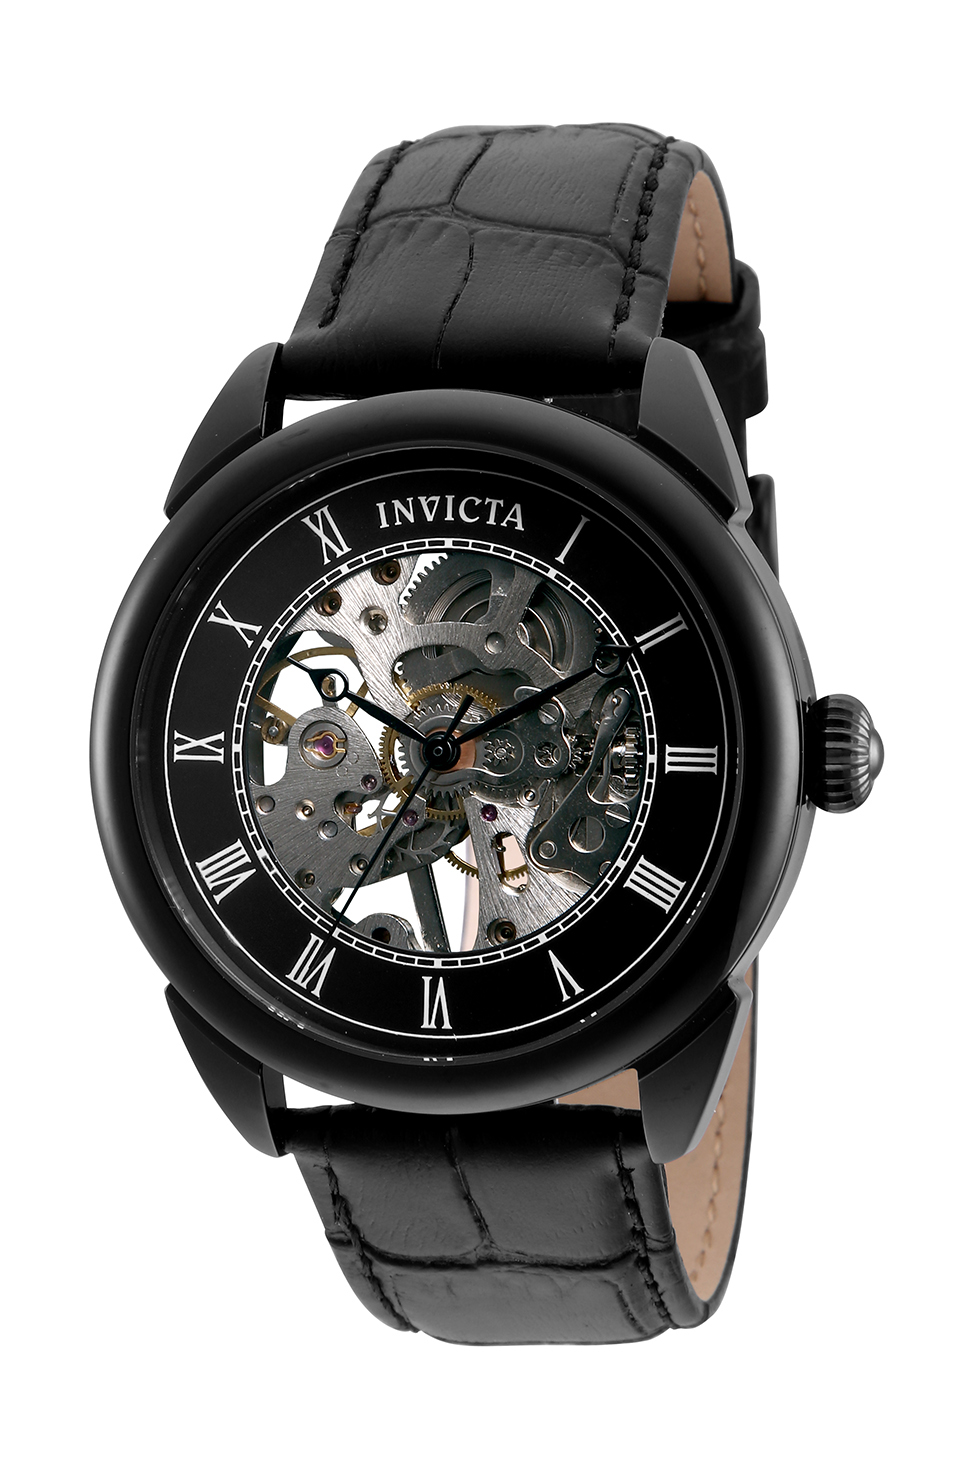 Invicta Specialty Mechanical Men's Watch - 42mm, Black (32632)